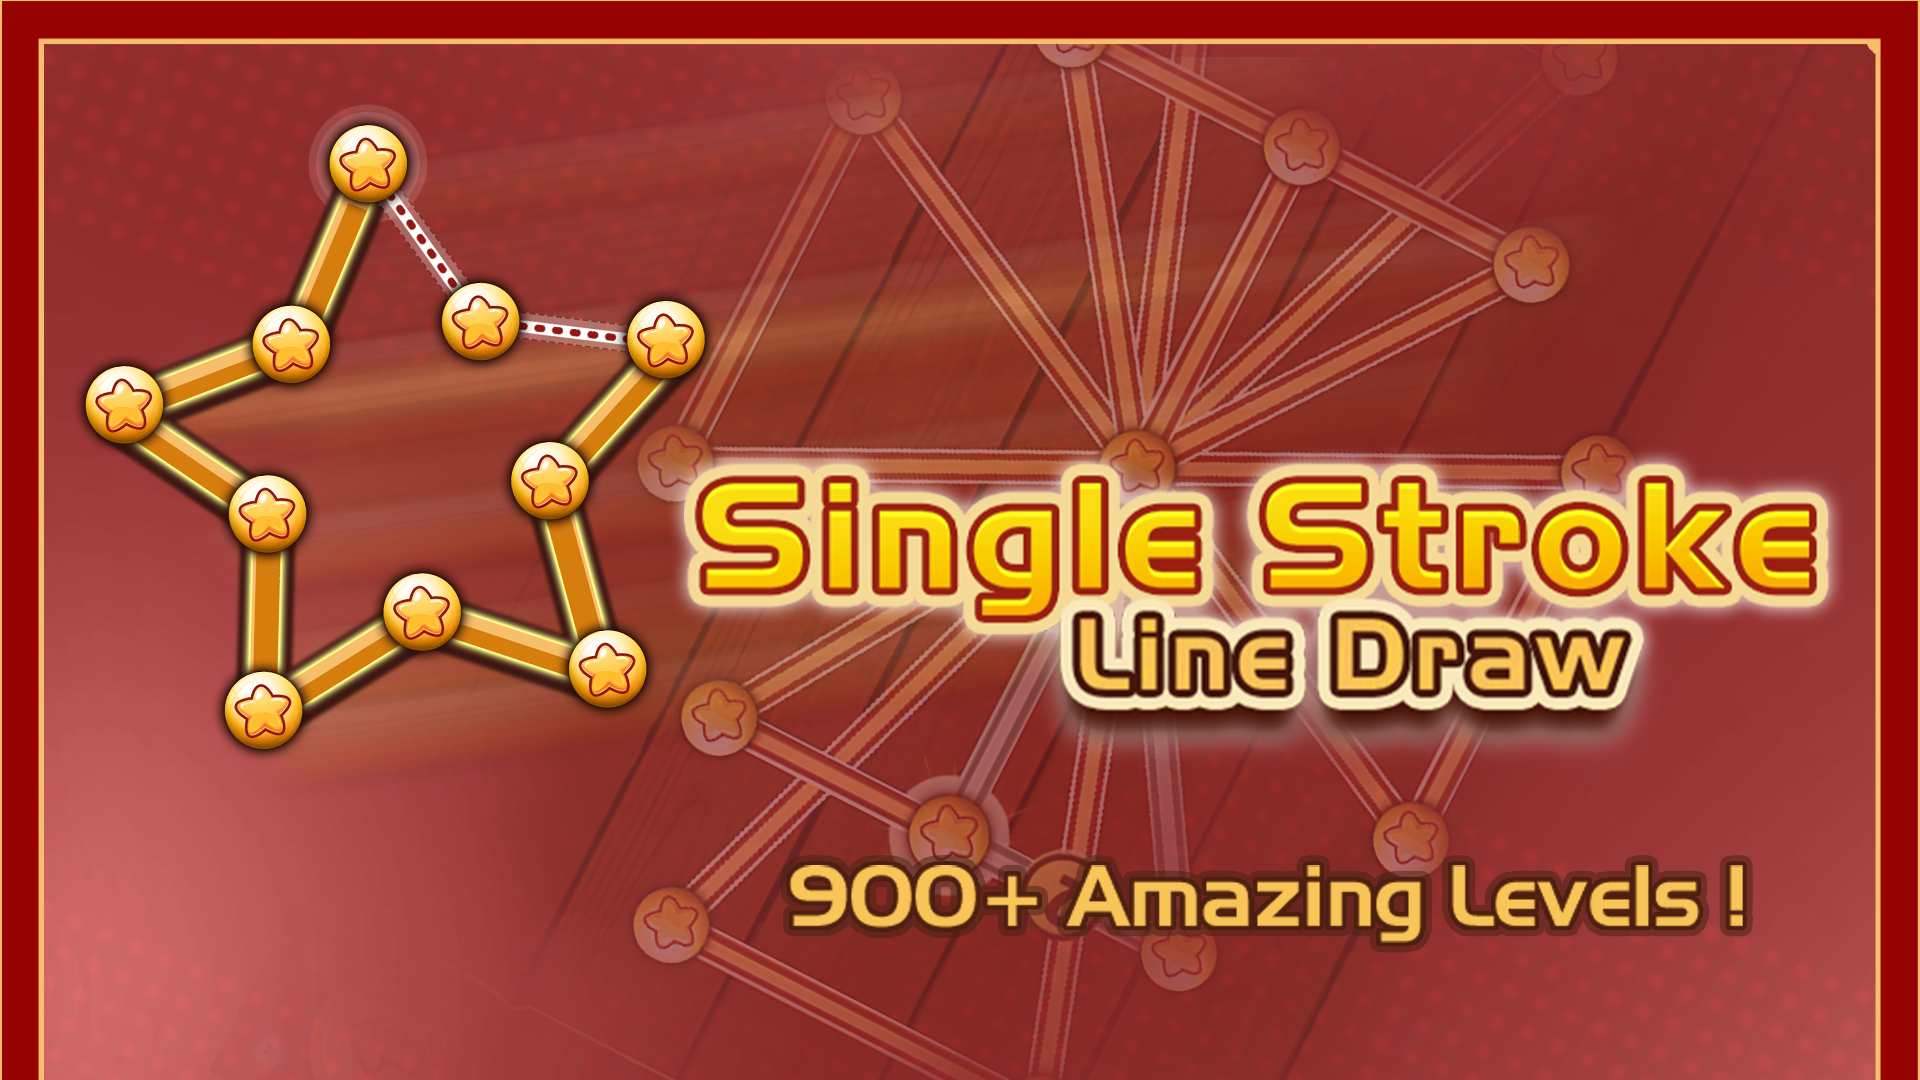 Single Stroke Line Draw Game Image